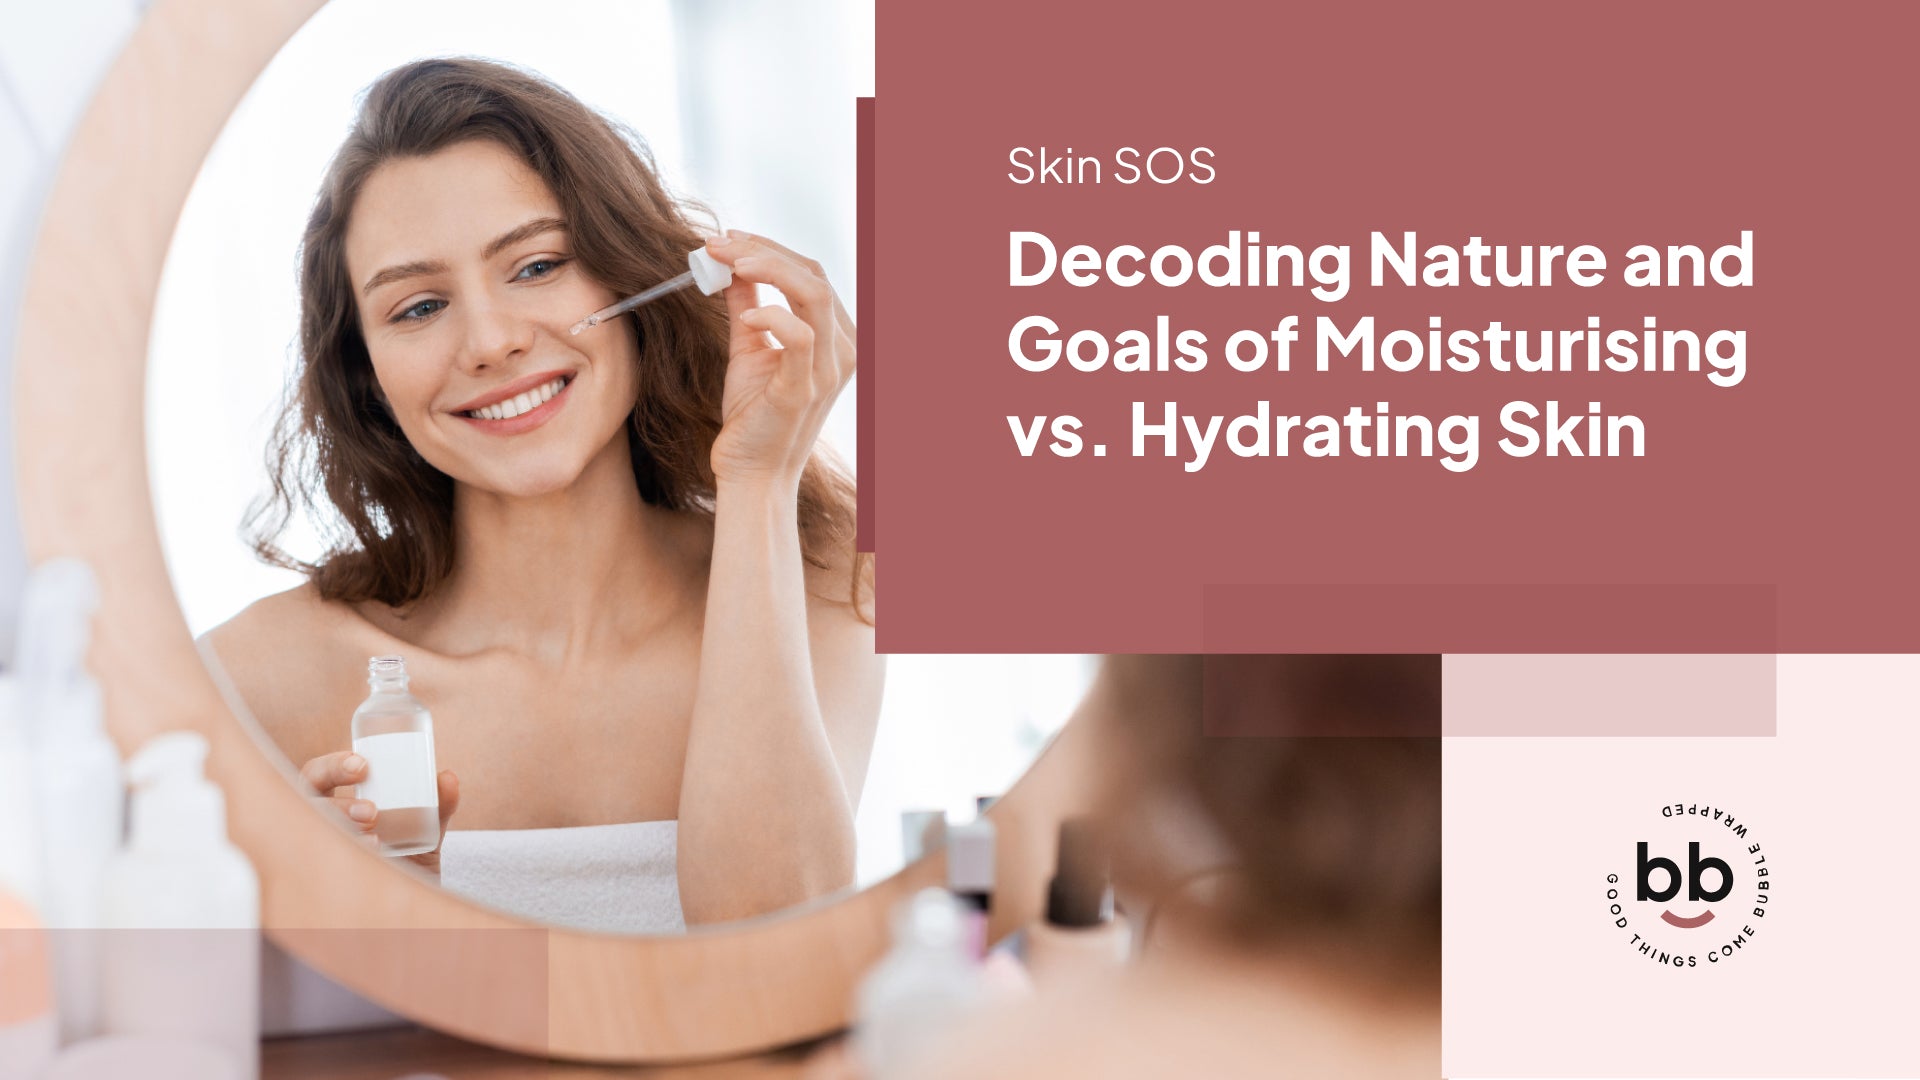 Skin SOS: Decoding Nature and Goals of Moisturising vs. Hydrating Skin